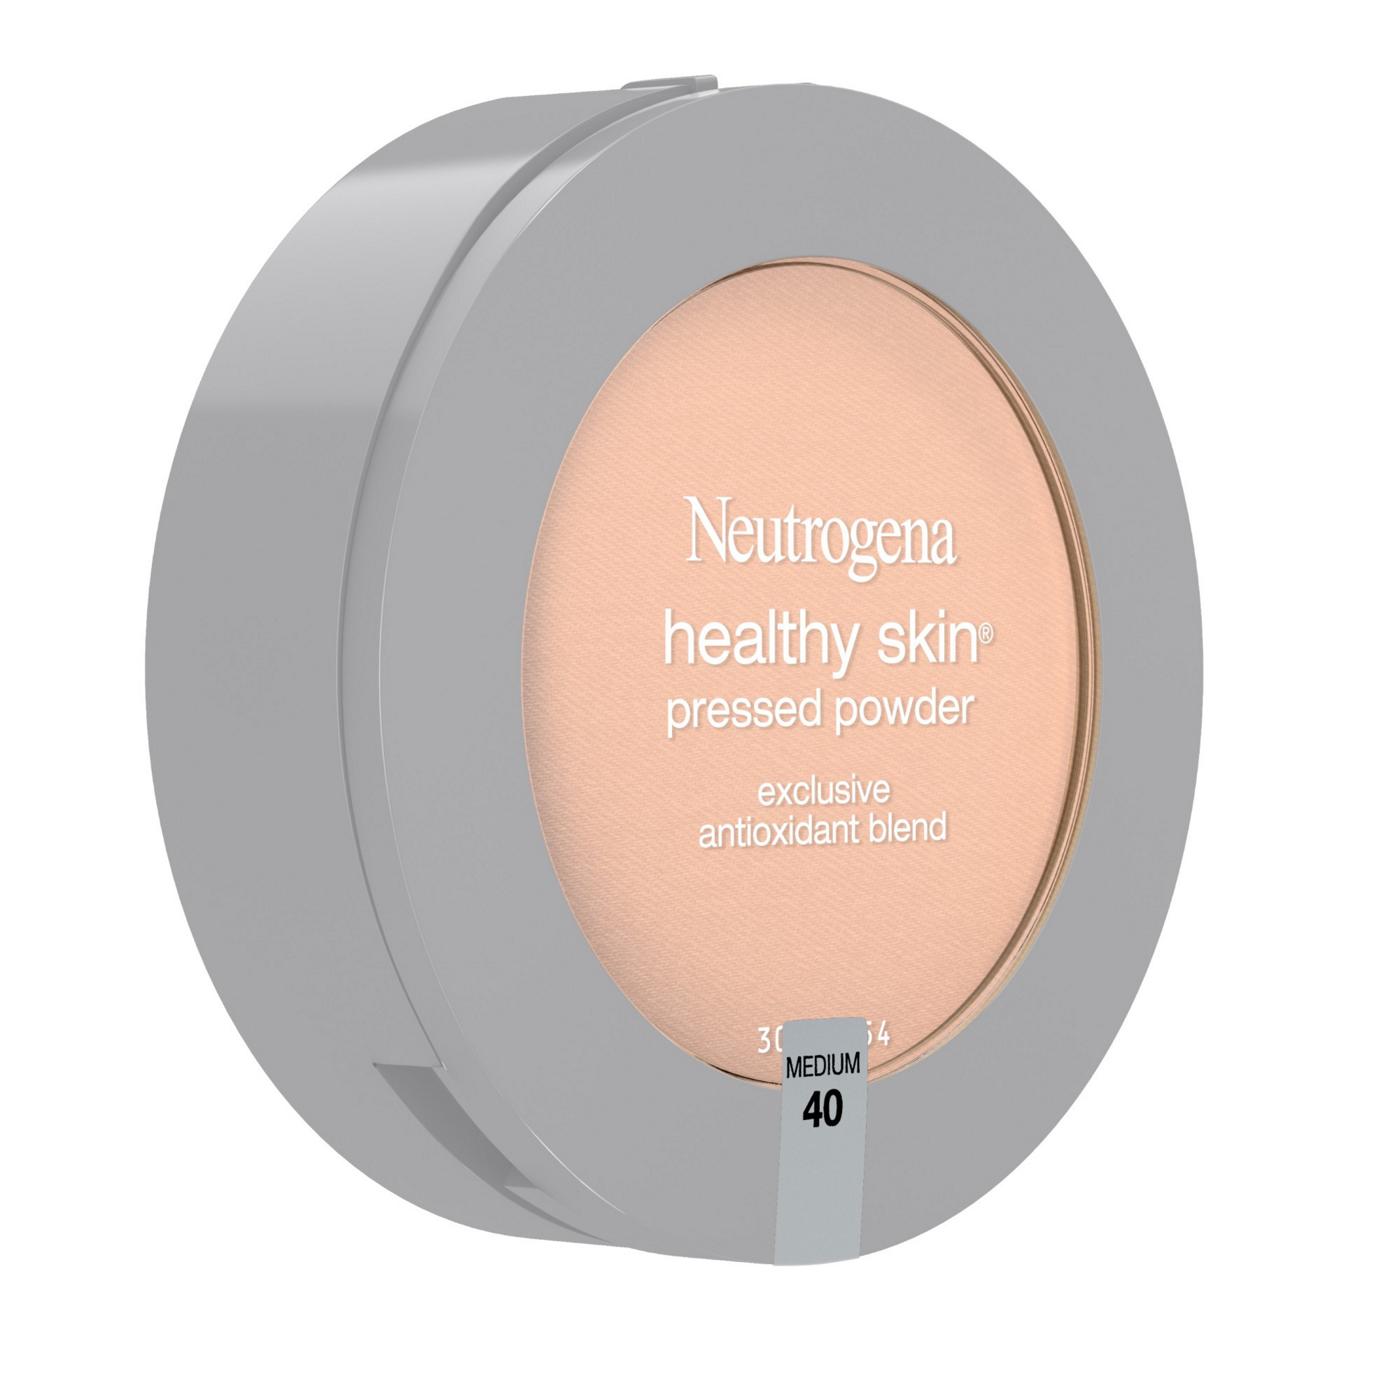 Neutrogena Healthy Skin Pressed Powder 40 Medium; image 3 of 5